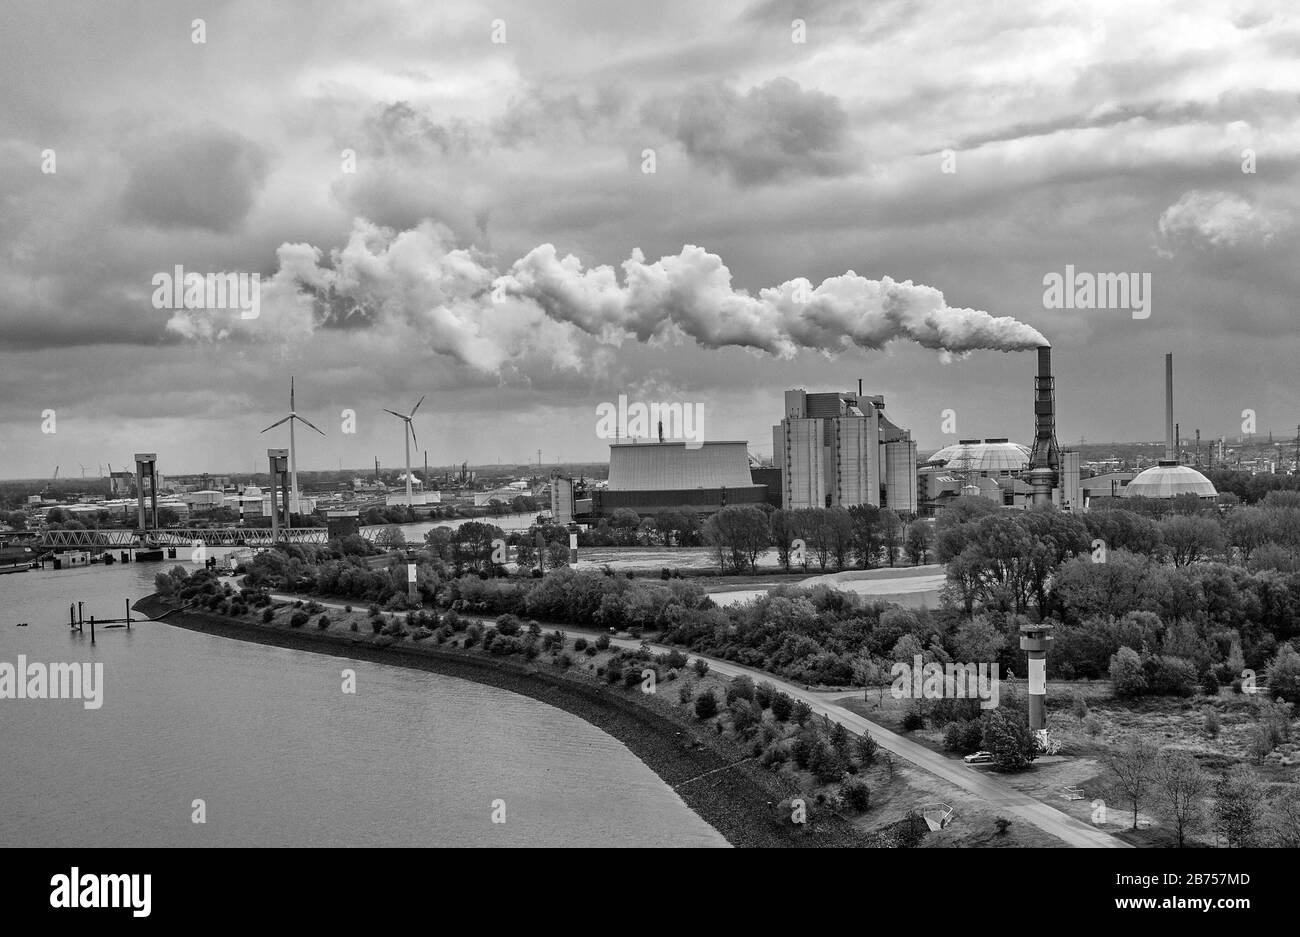 Germany, Hamburg, 06.05.2019. The Moorburg im Hamburg coal-fired power plant on 06.05.2019. [automated translation] Stock Photo